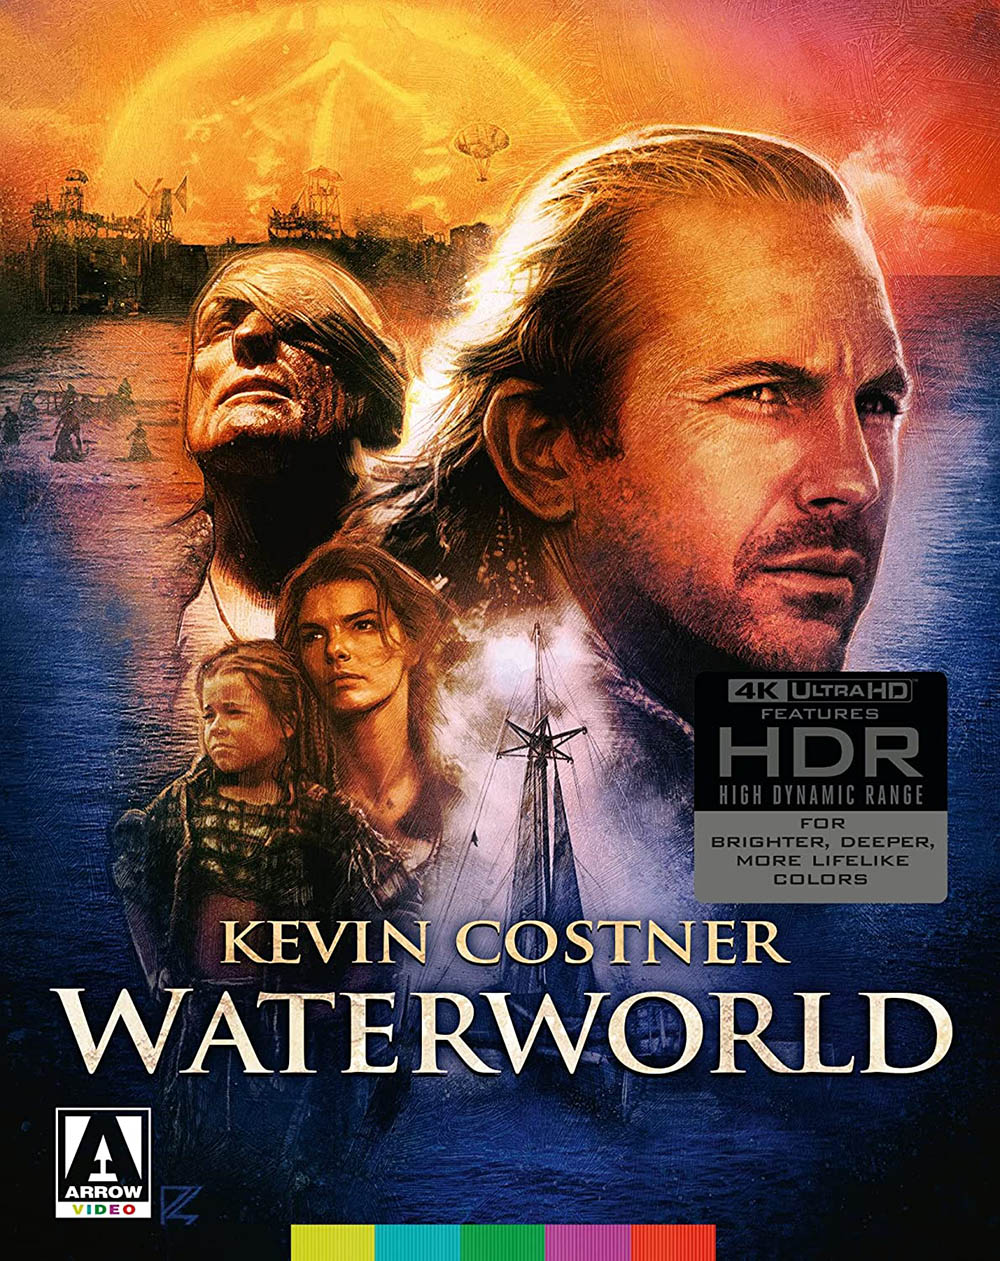 Waterworld 4k Ultra HD Arrow Video Limited Edition